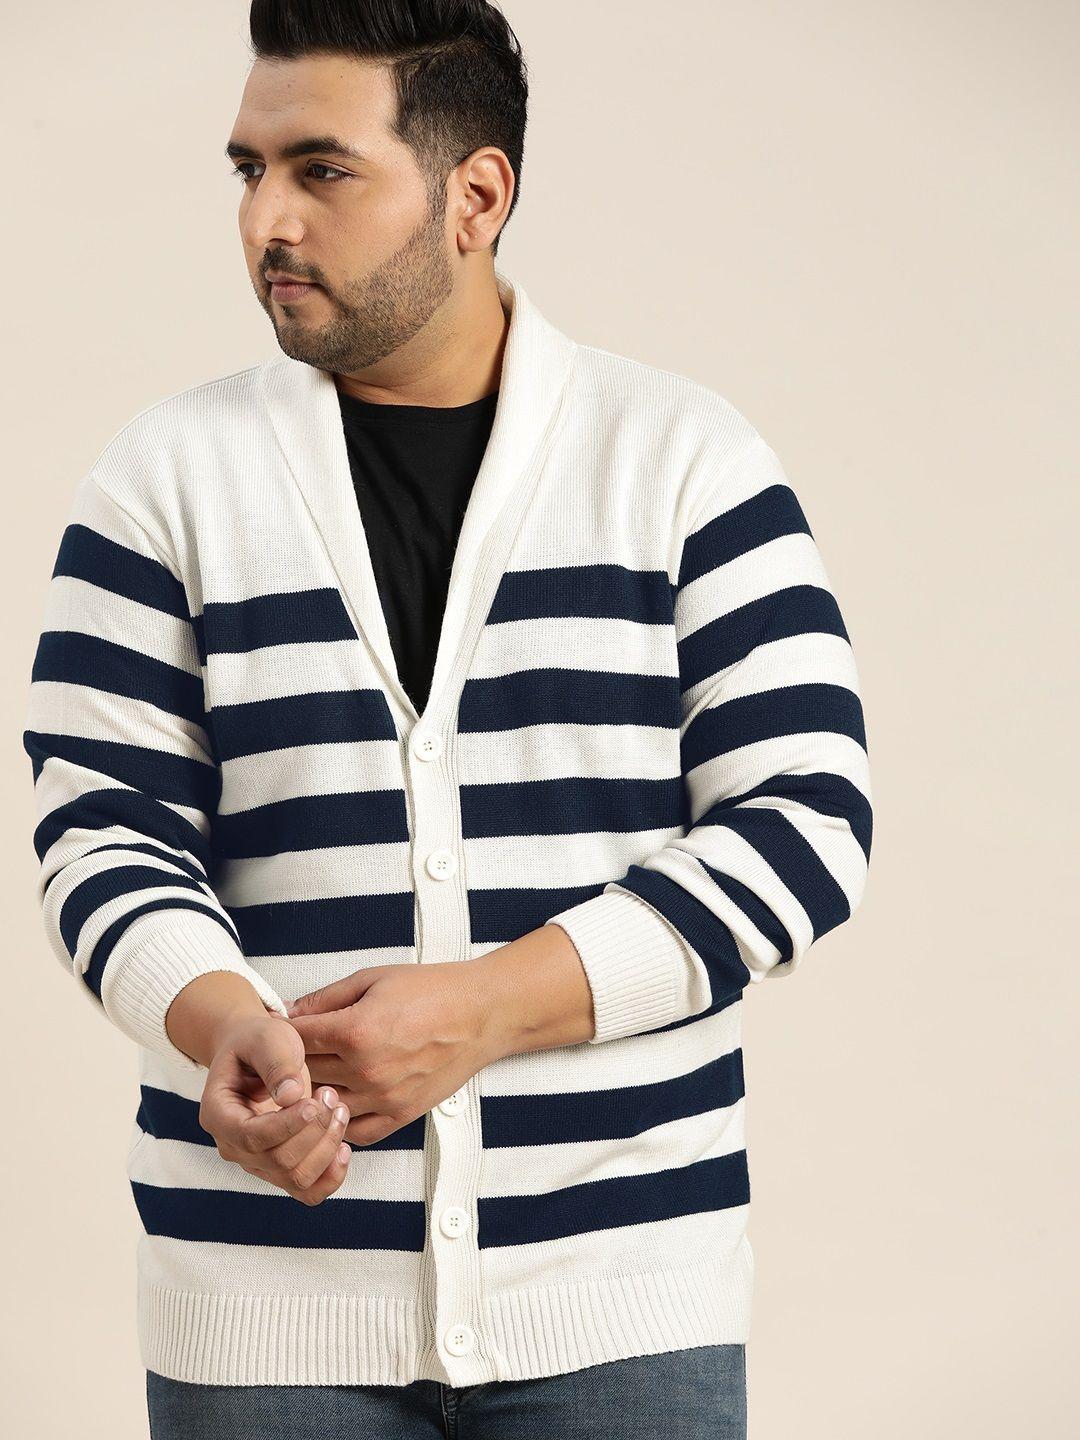 sztori-men-plus-size-off-white-&-navy-blue-striped-cardigan